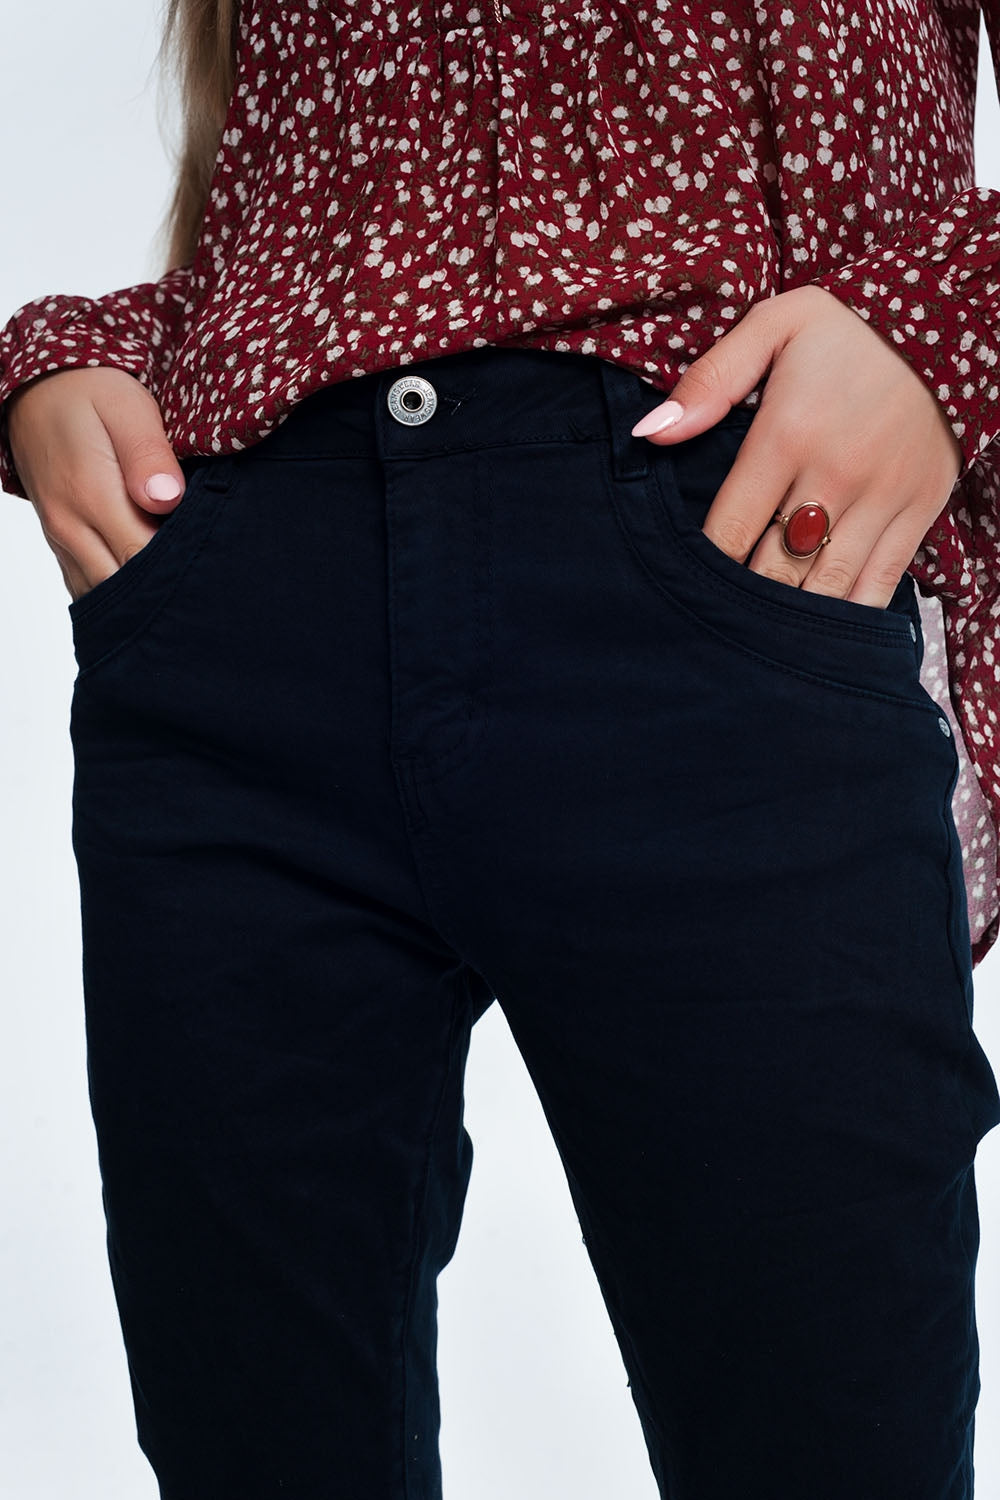 Drop crotch skinny jean in navyJeans